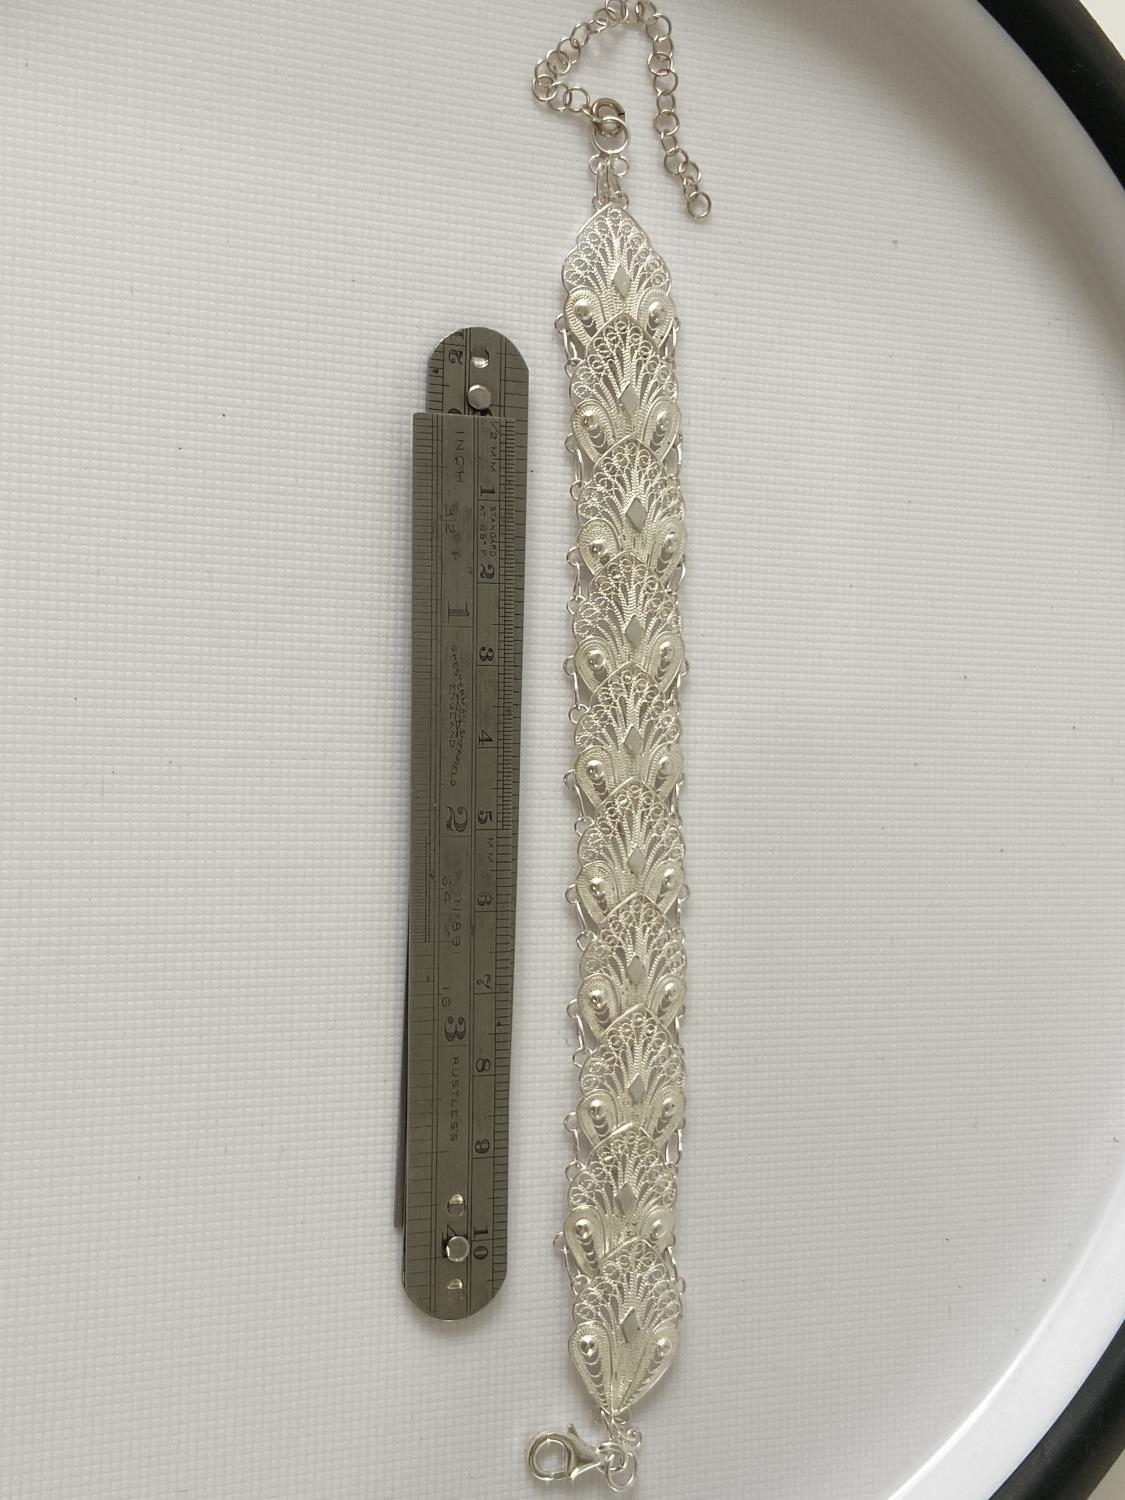 A Silver filigree bracelet [20cm in length] - Image 2 of 2